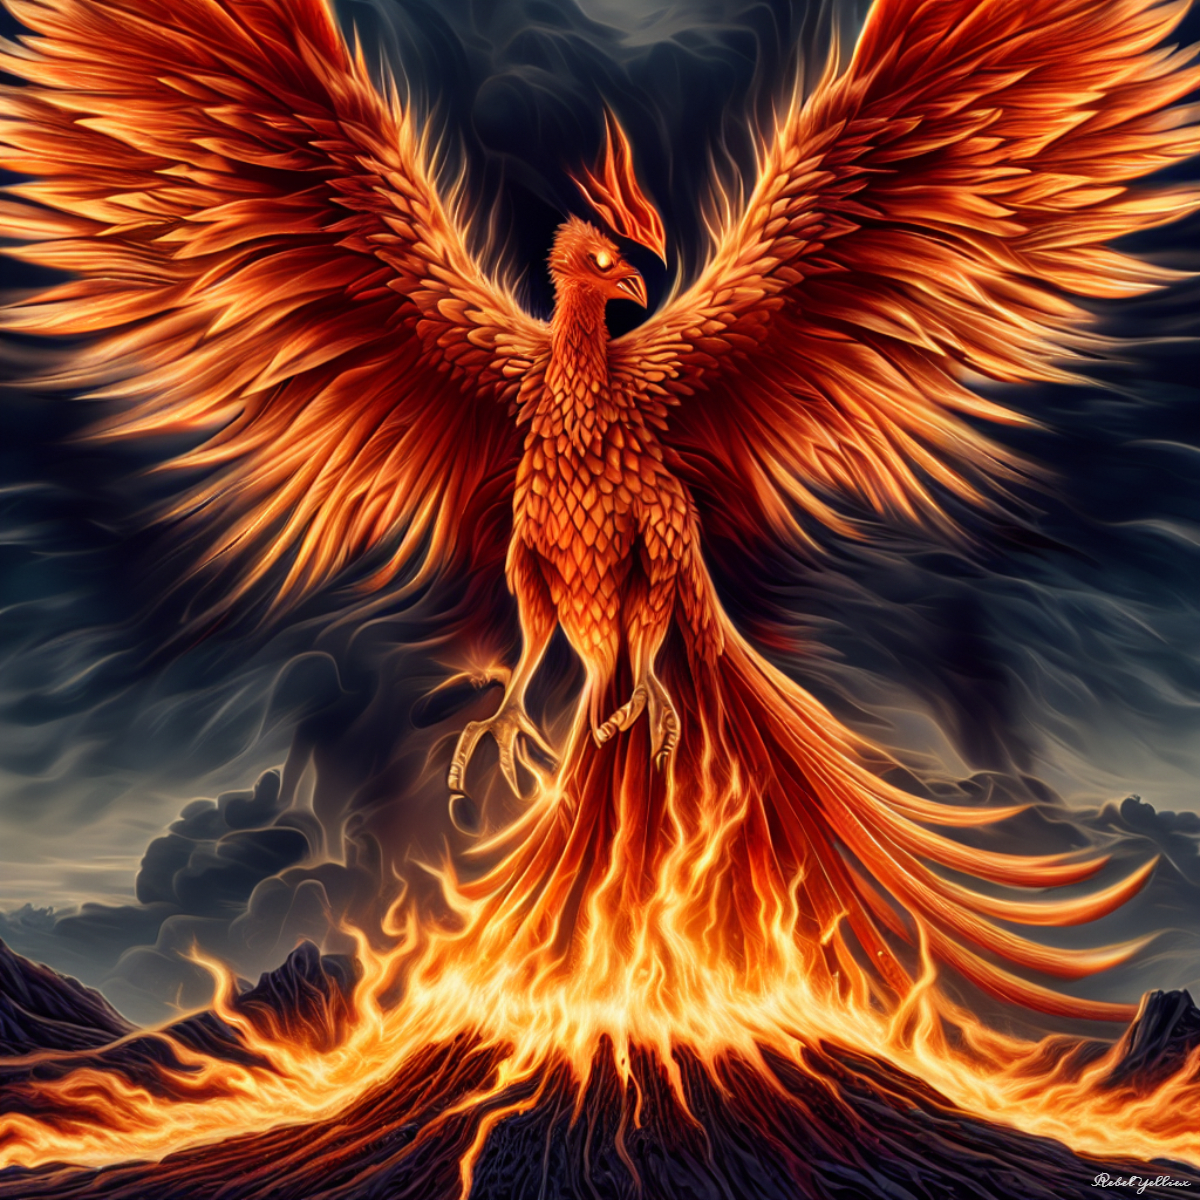 A majestic Phoenix bird by xRebelYellx on DeviantArt